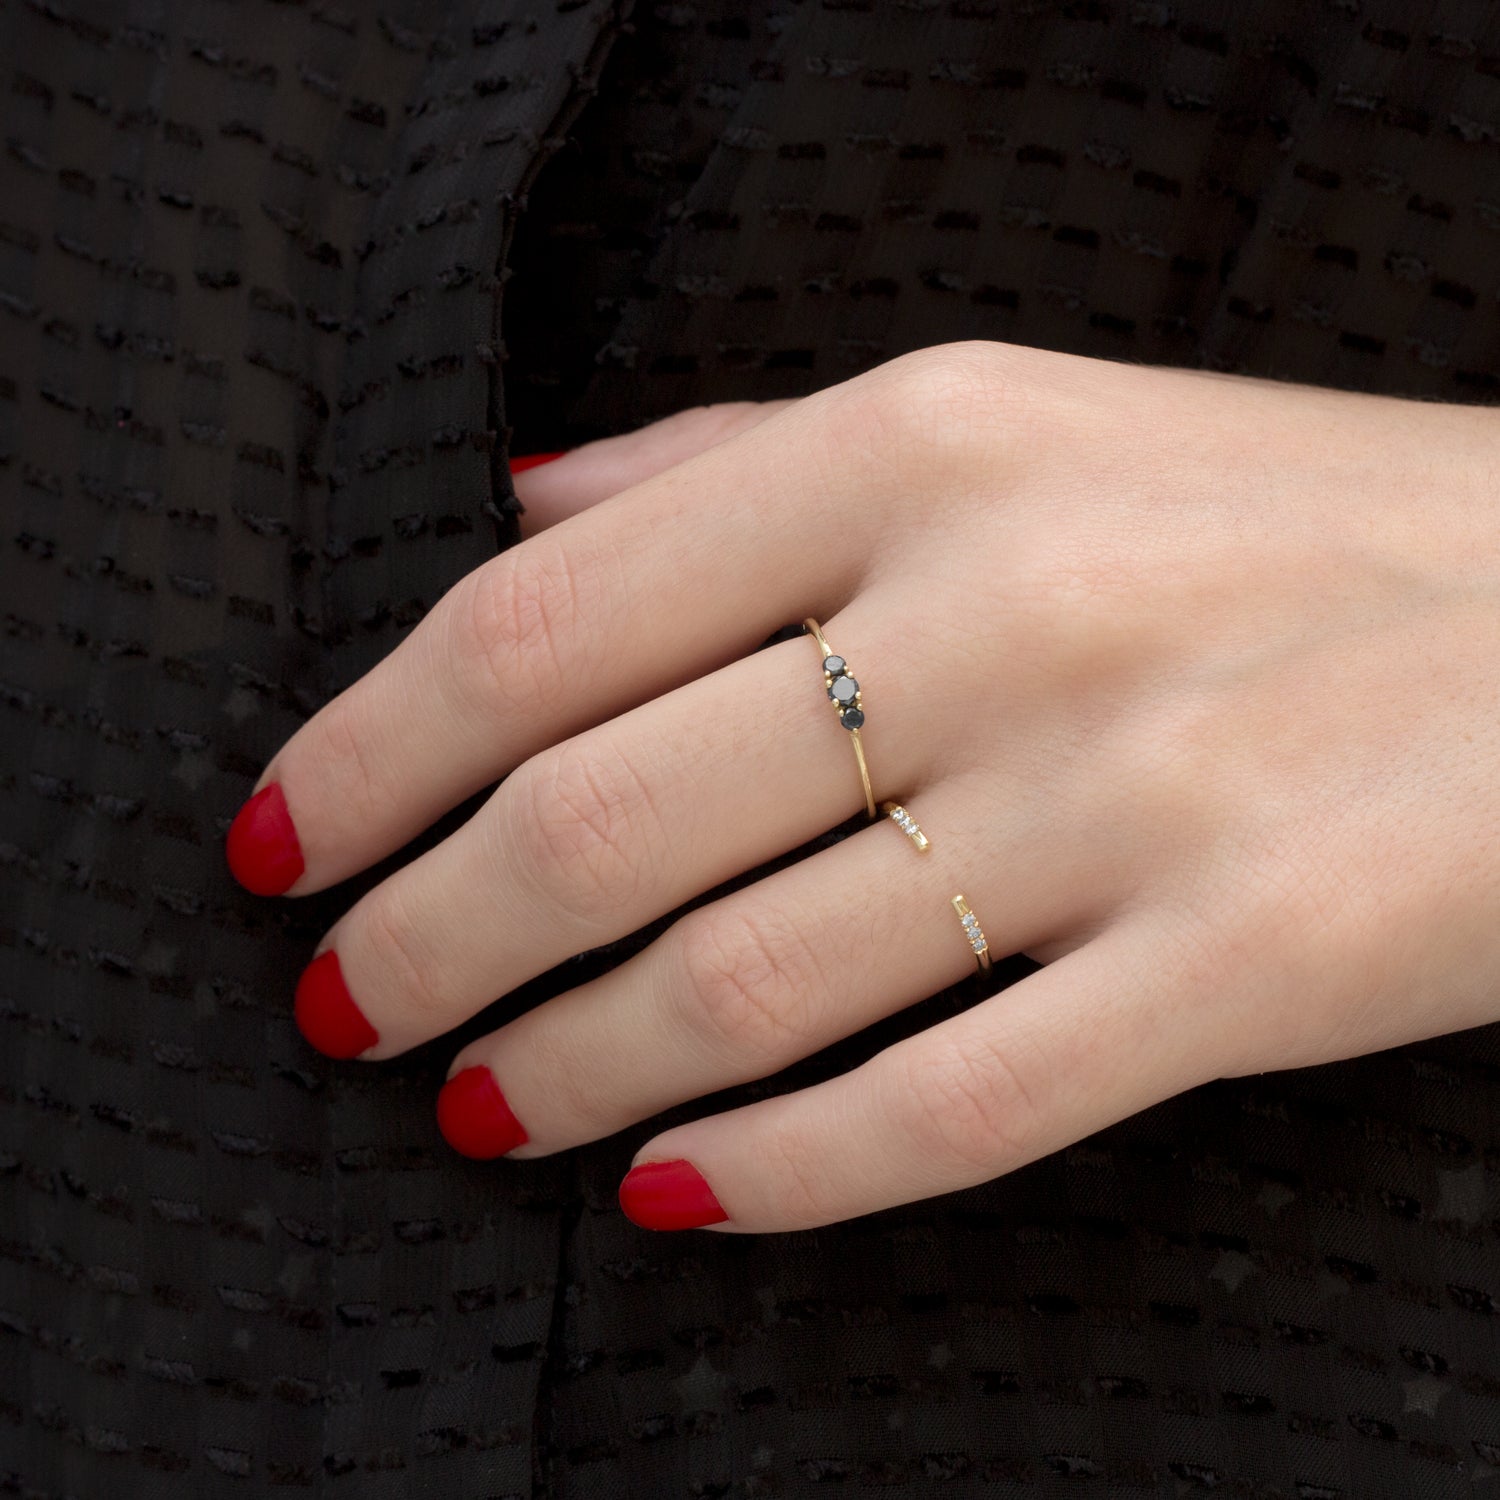 Audrey Gold Ring 3 mm Black Diamonds